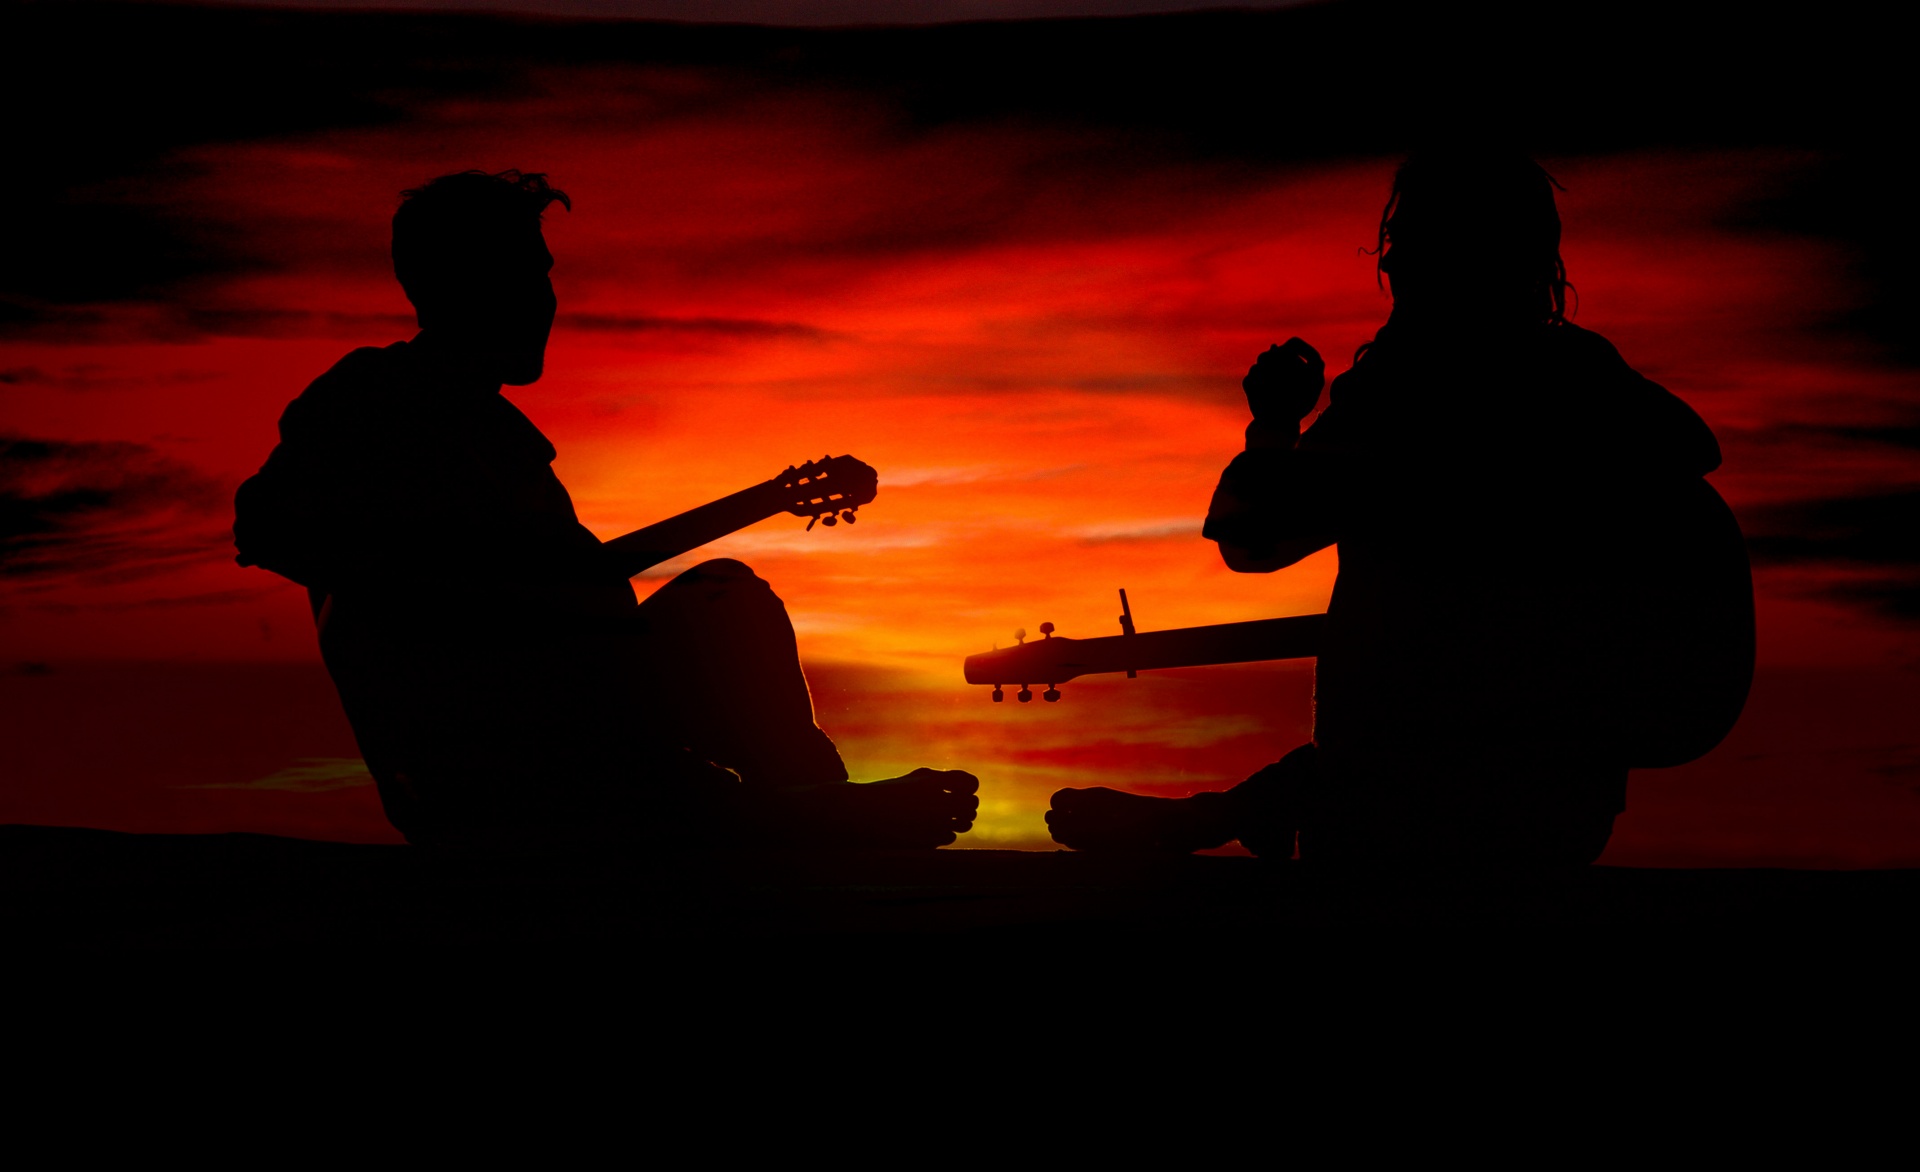 Musicians At Sunset